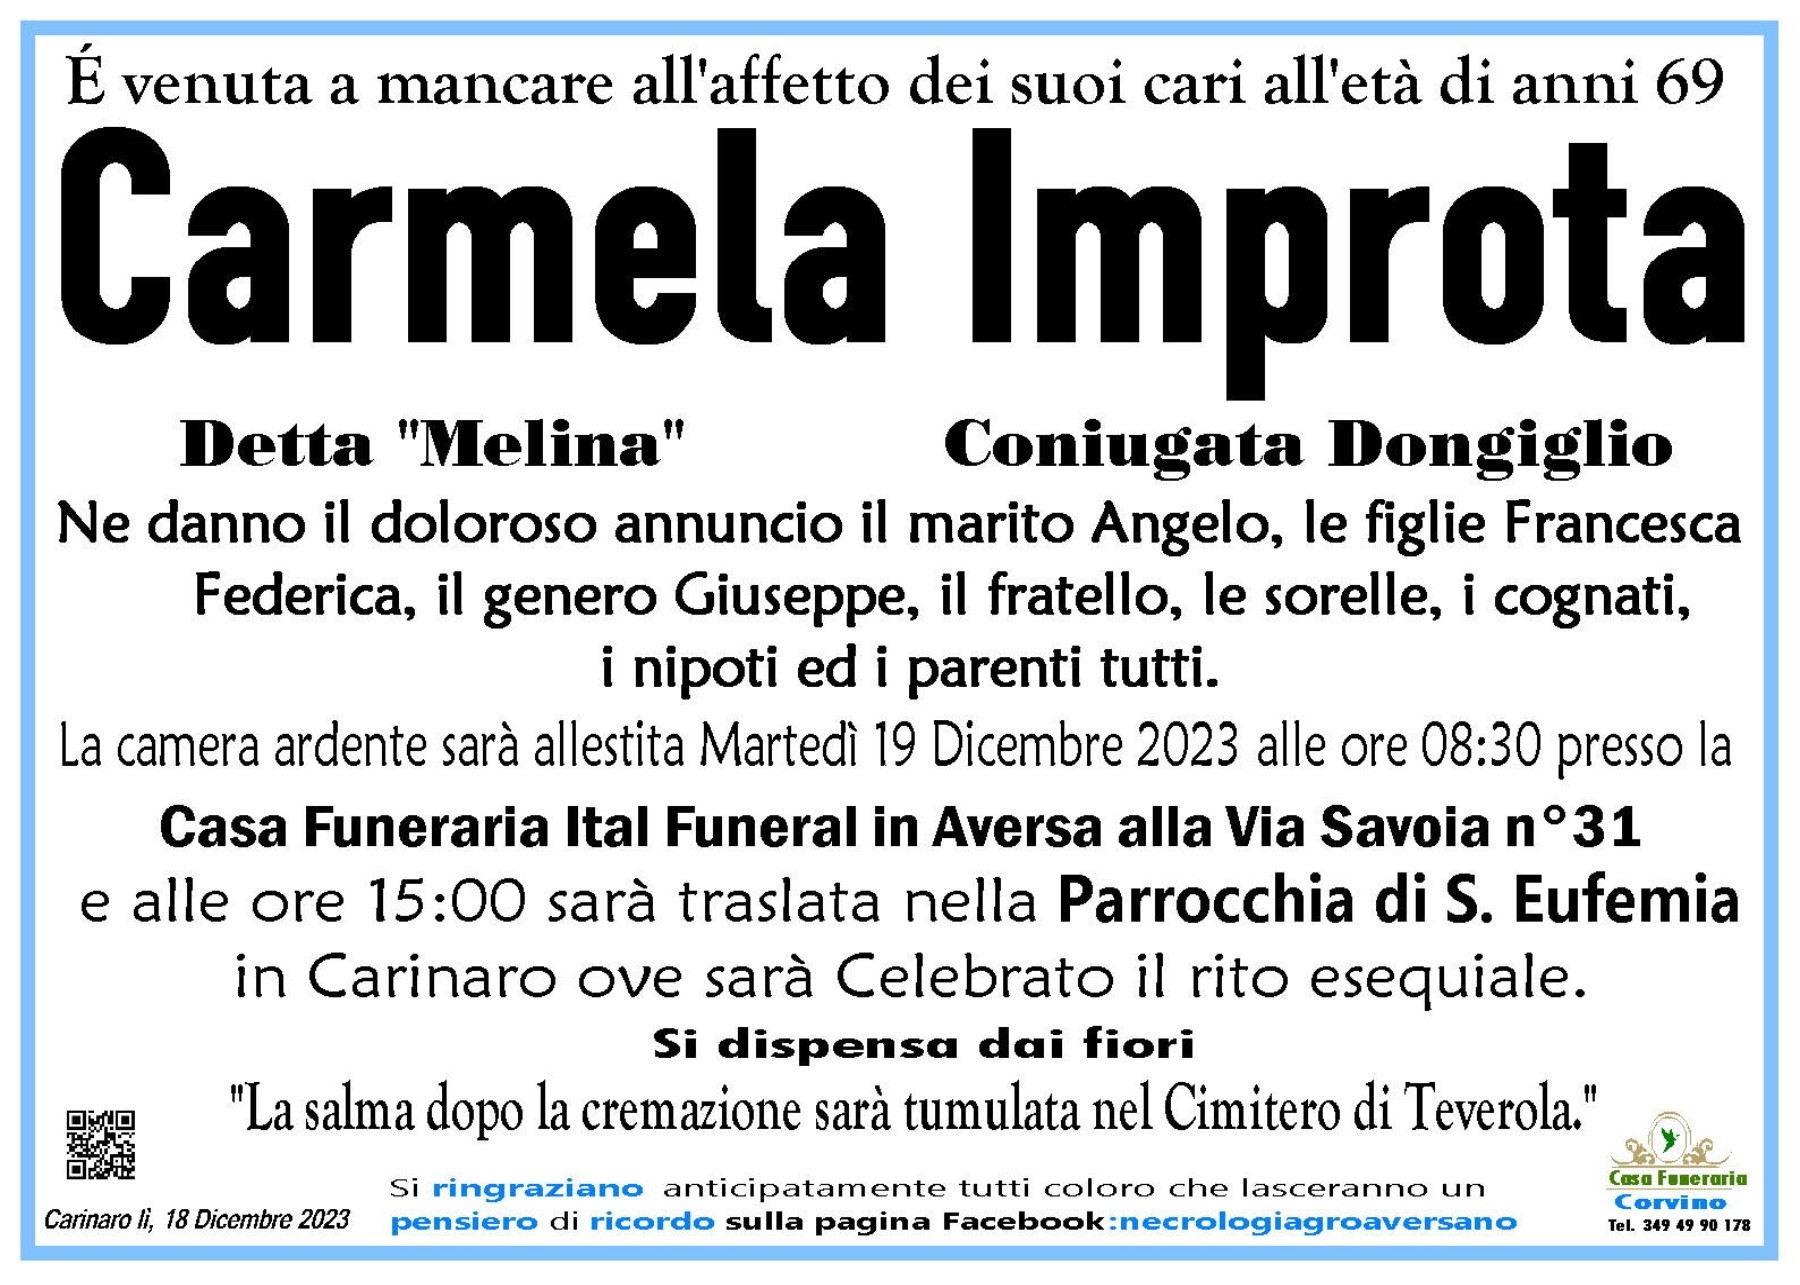 Carmela Improta